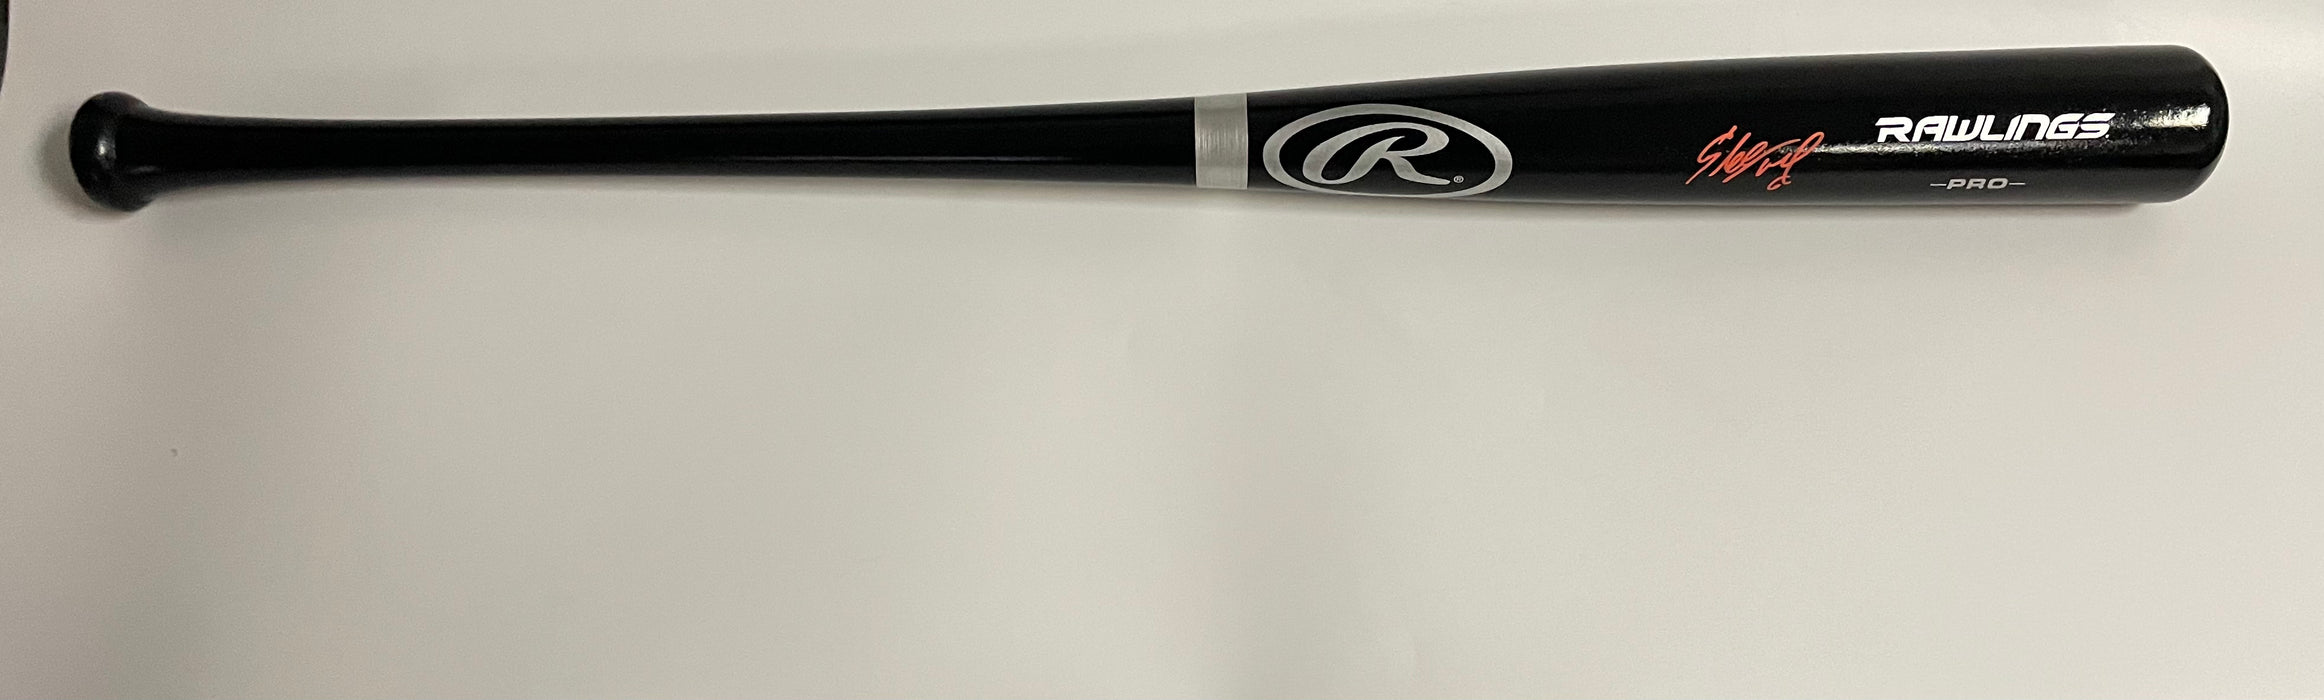 Starling Marte Autographed Black Rawlings Pro Model Bat (JSA)